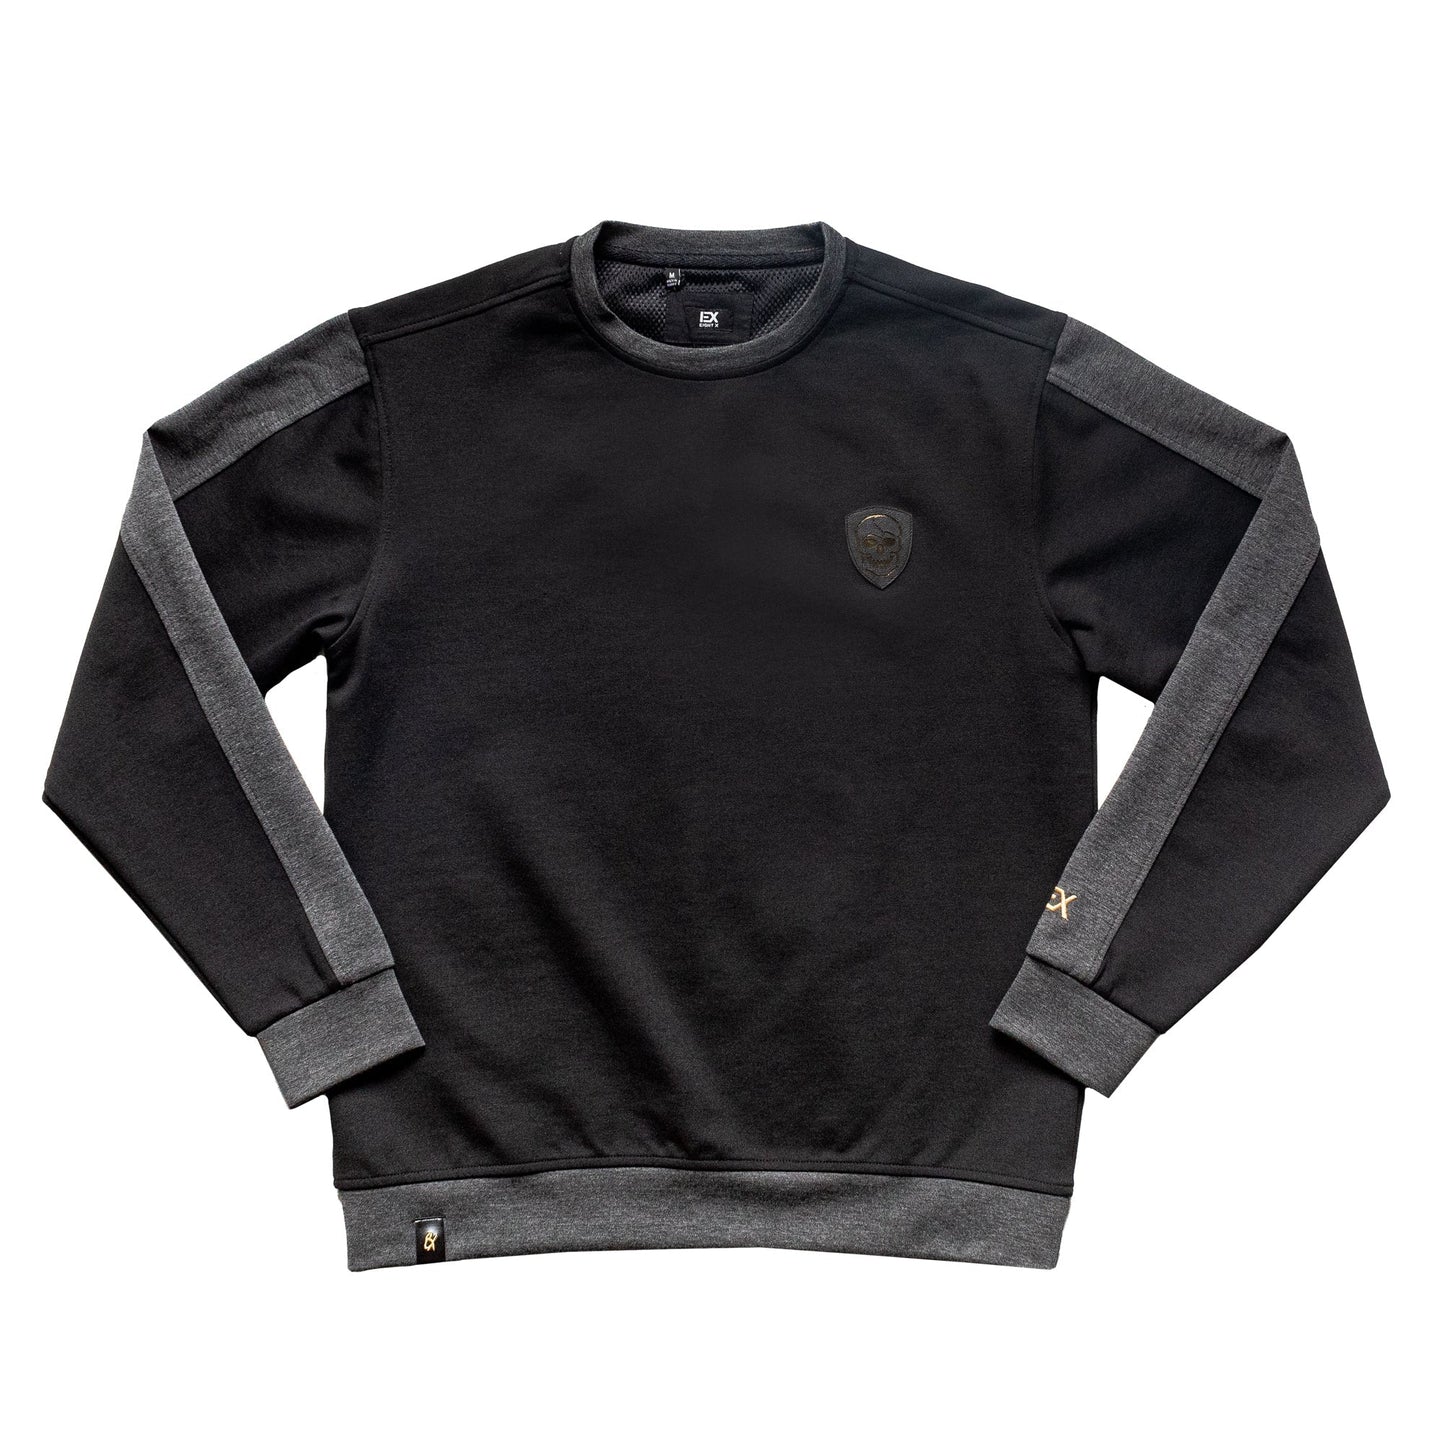 Eight-X Skull Crewneck Pullover Sweatshirt - Black